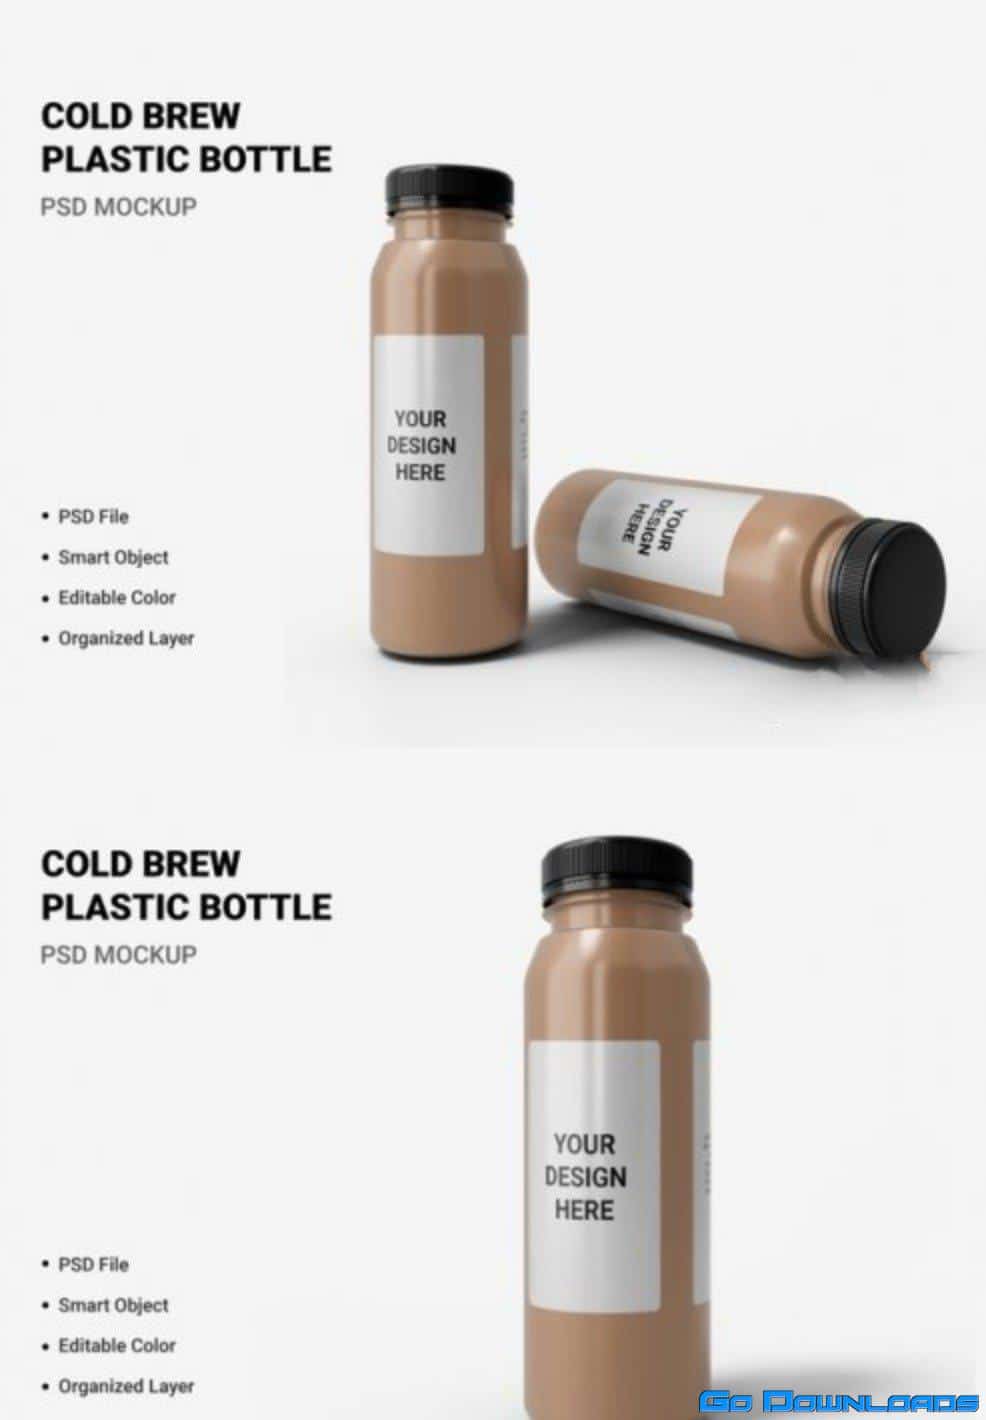 Cold brew plastic bottle mockup Free Download